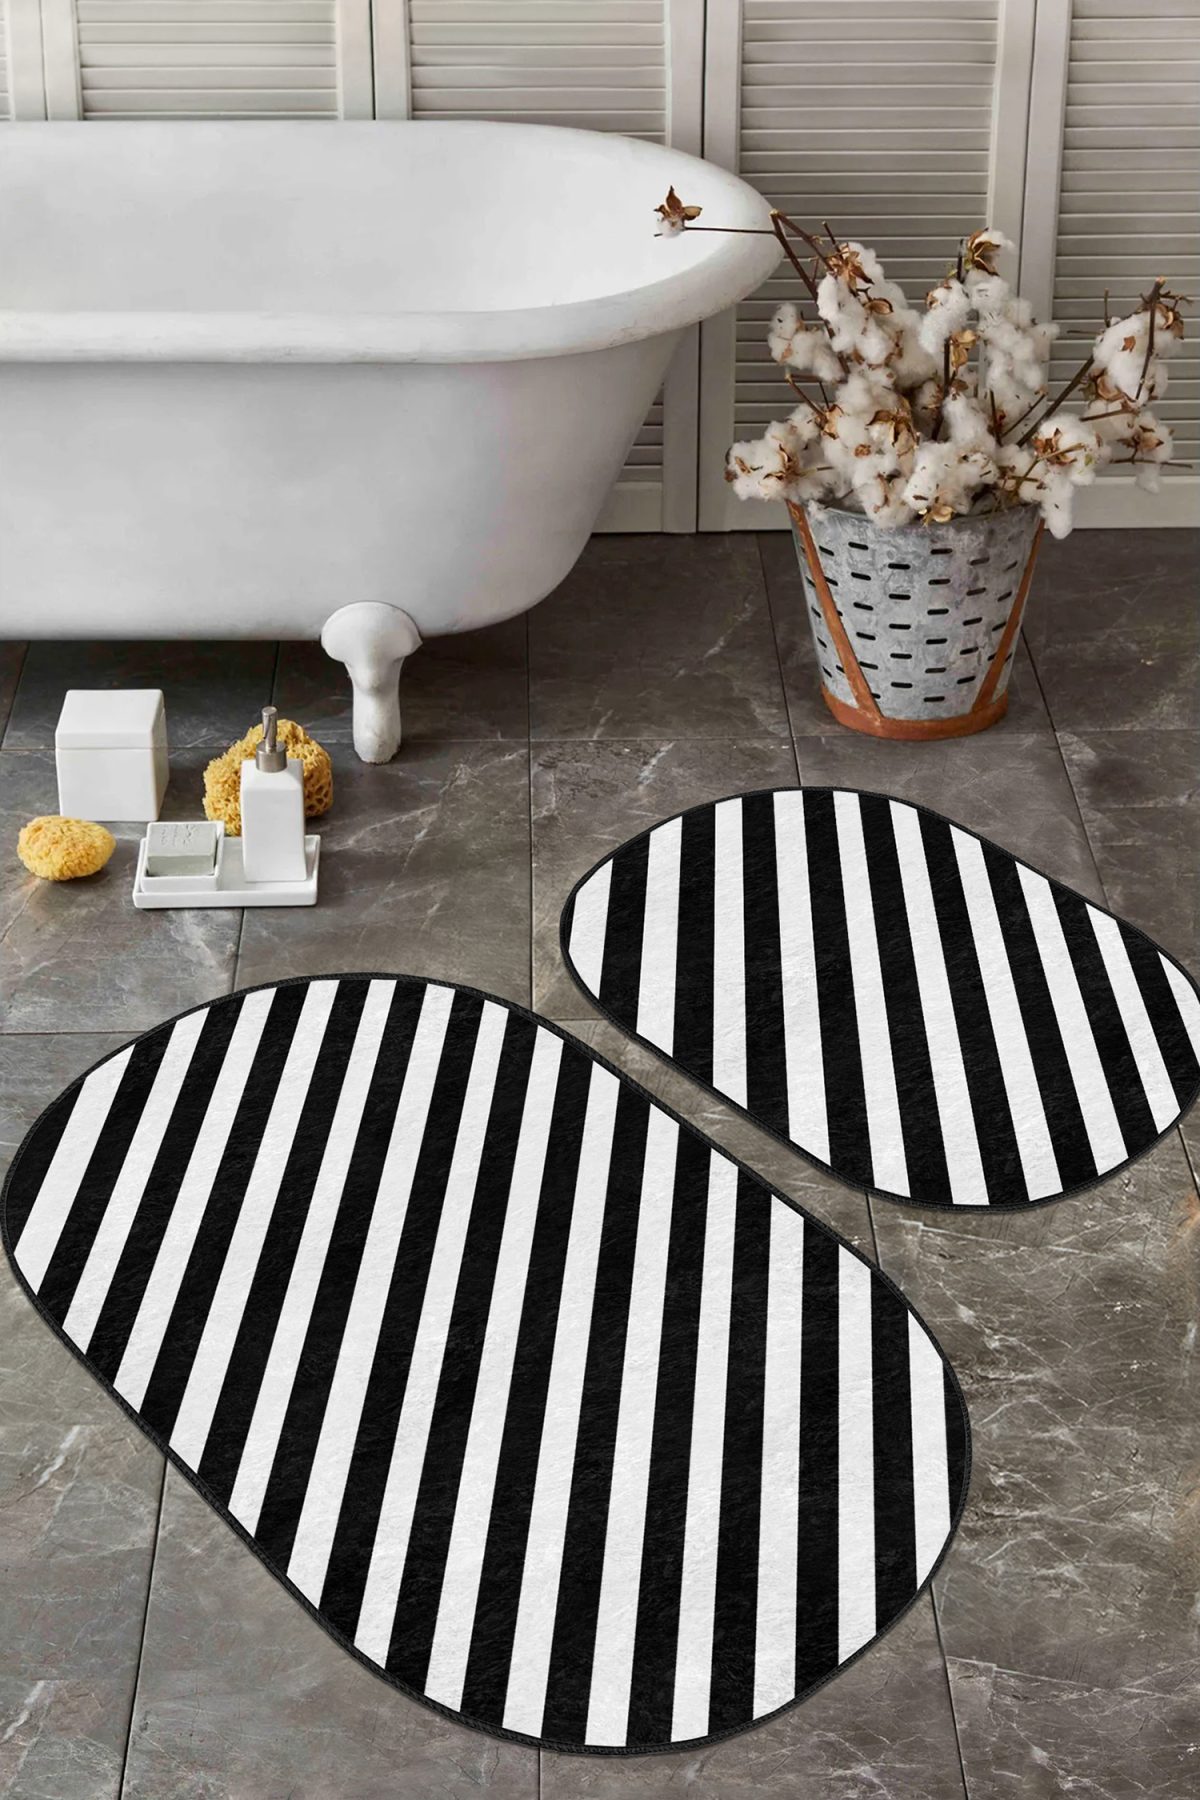 Siyah Beyaz Çapraz Çizgi Tasarımlı 2'li Oval Kaymaz Tabanlı Banyo & Mutfak Paspas Takımı Realhomes